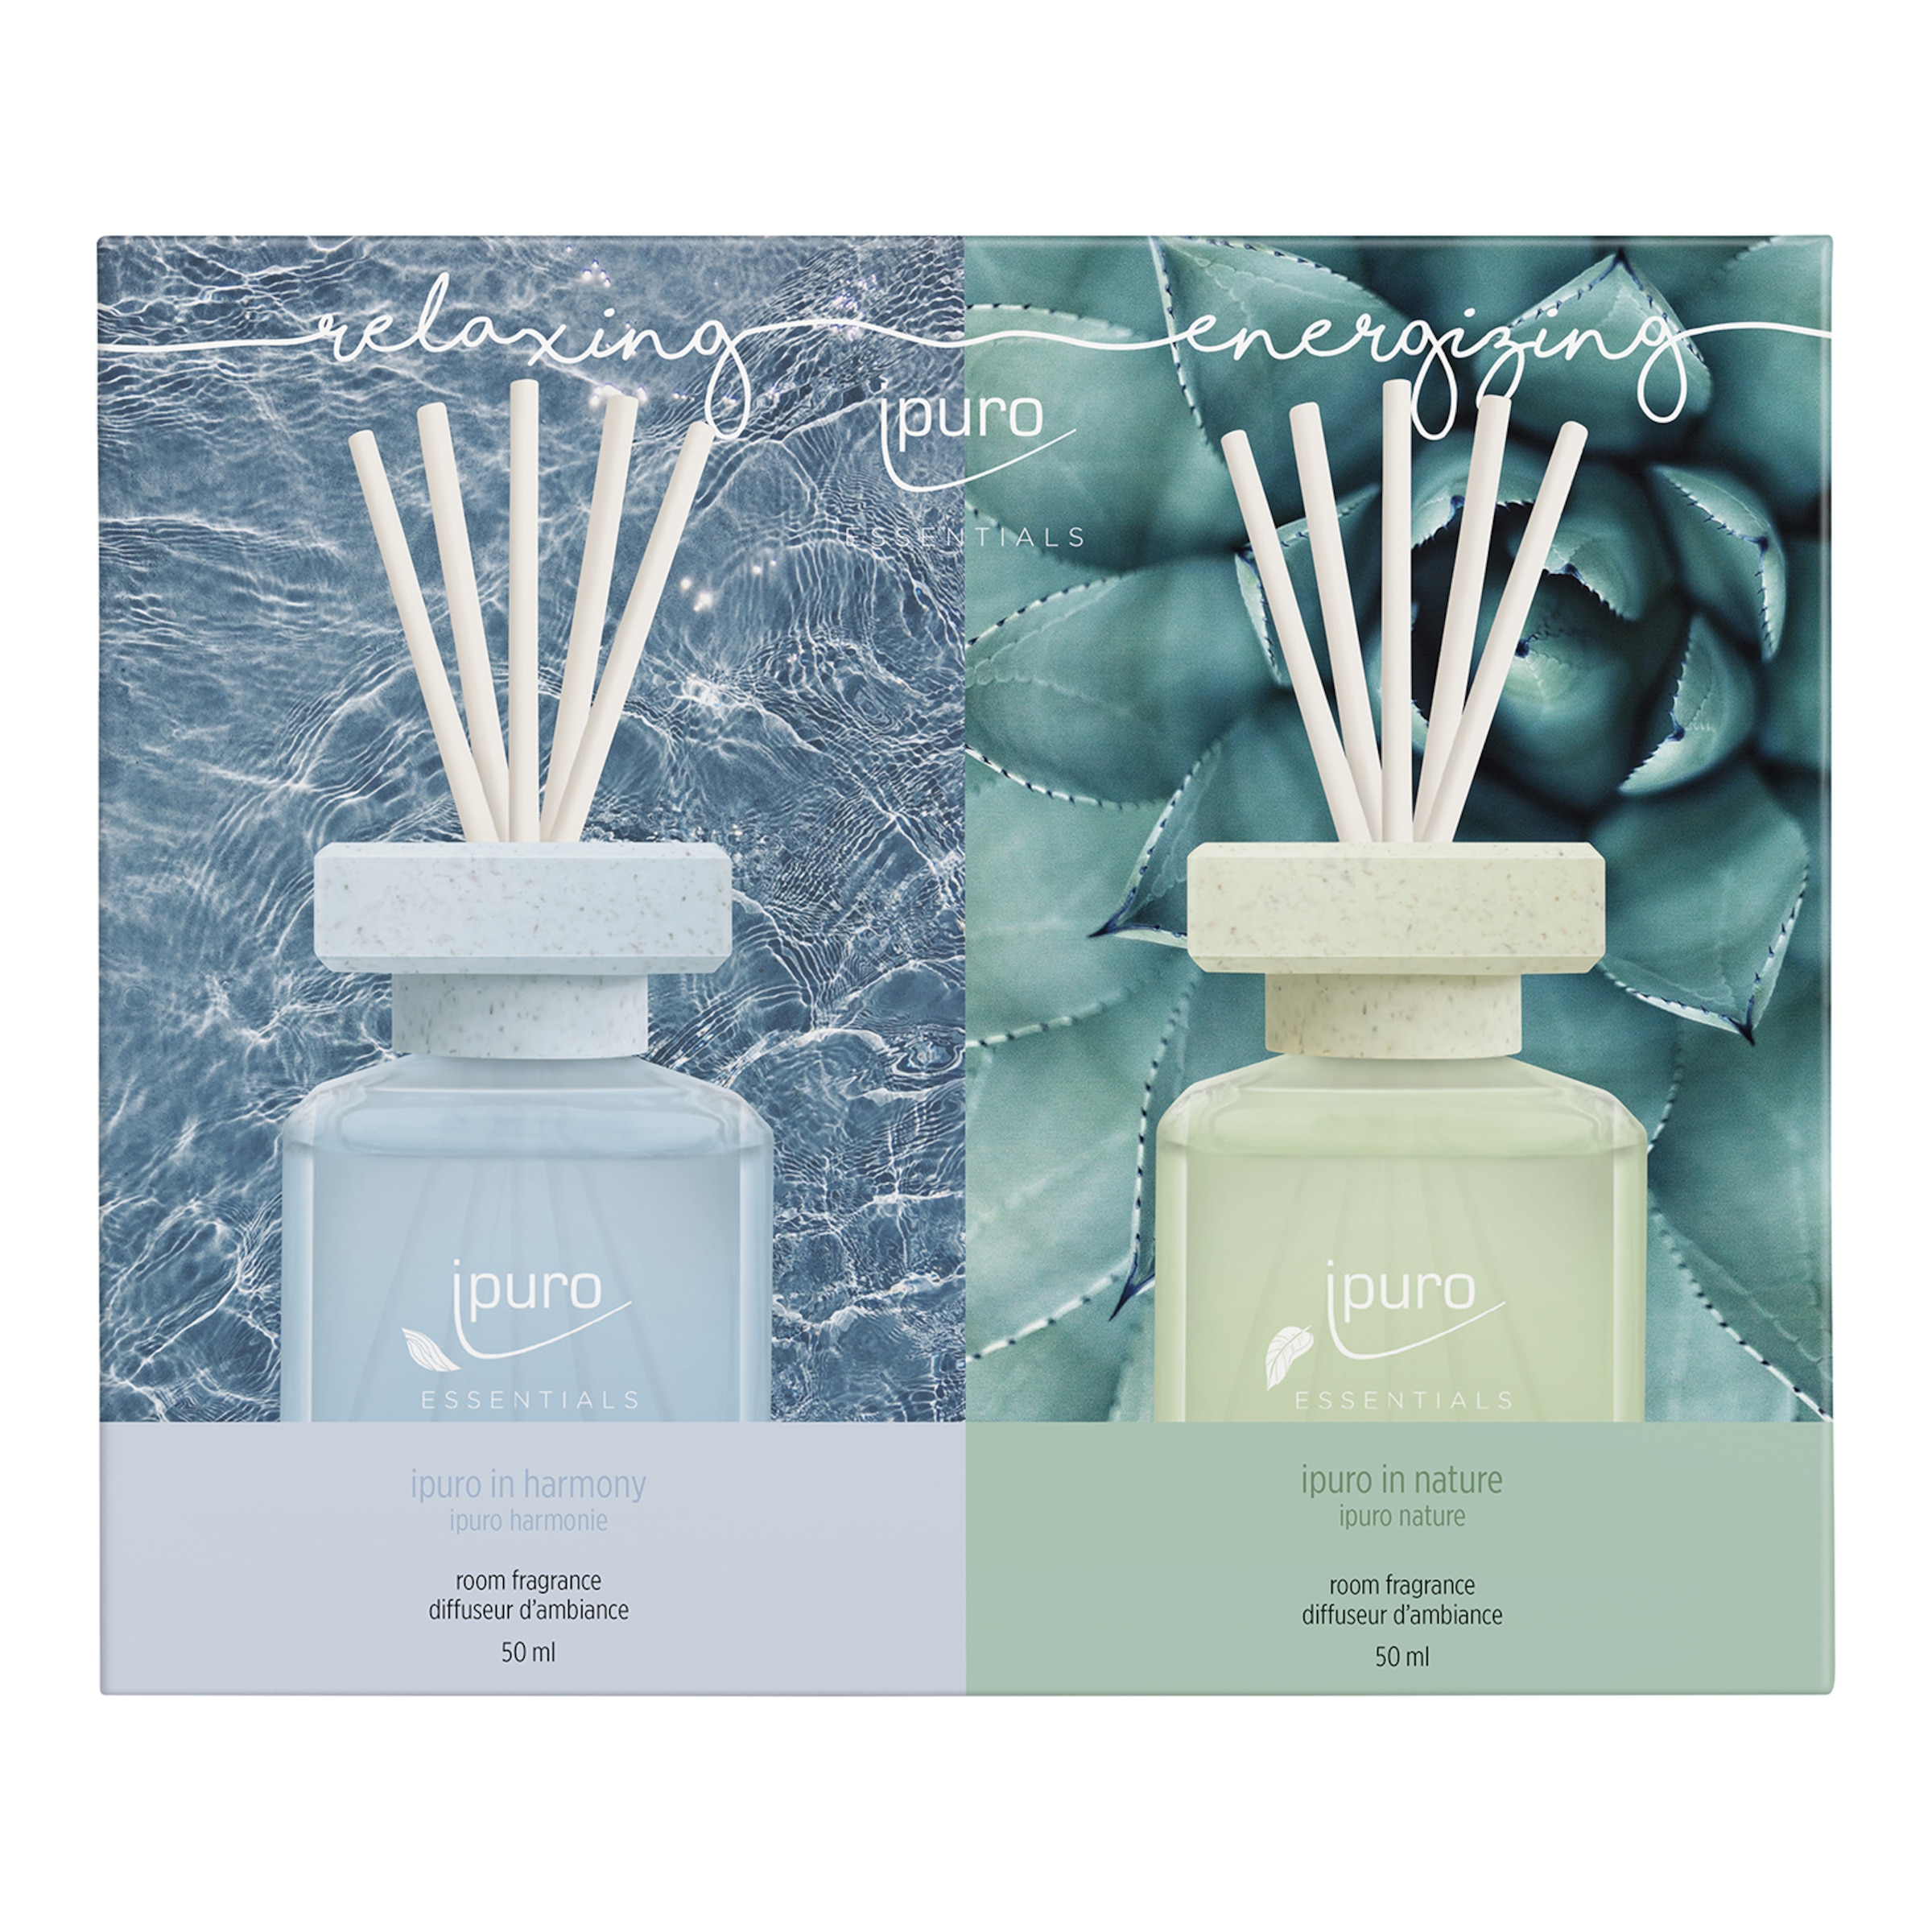 ESSENTIALS ipuro sensual & gentle layering room fragrance set